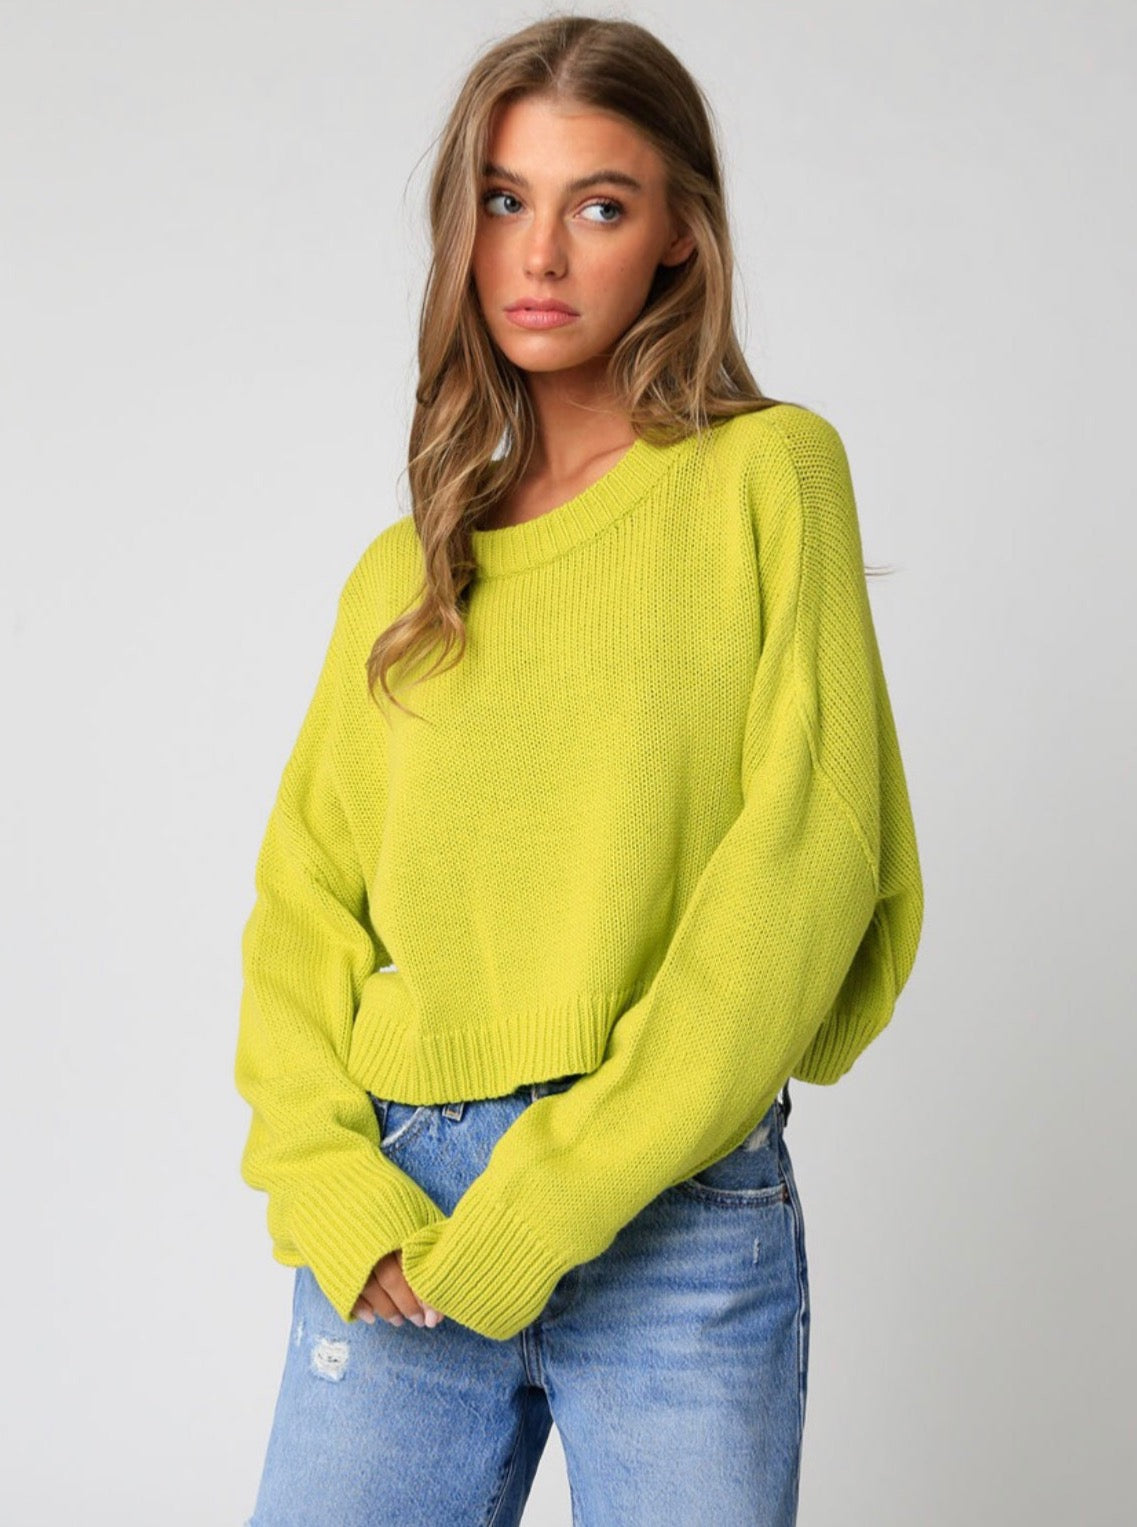 Key Lime Pie sweater